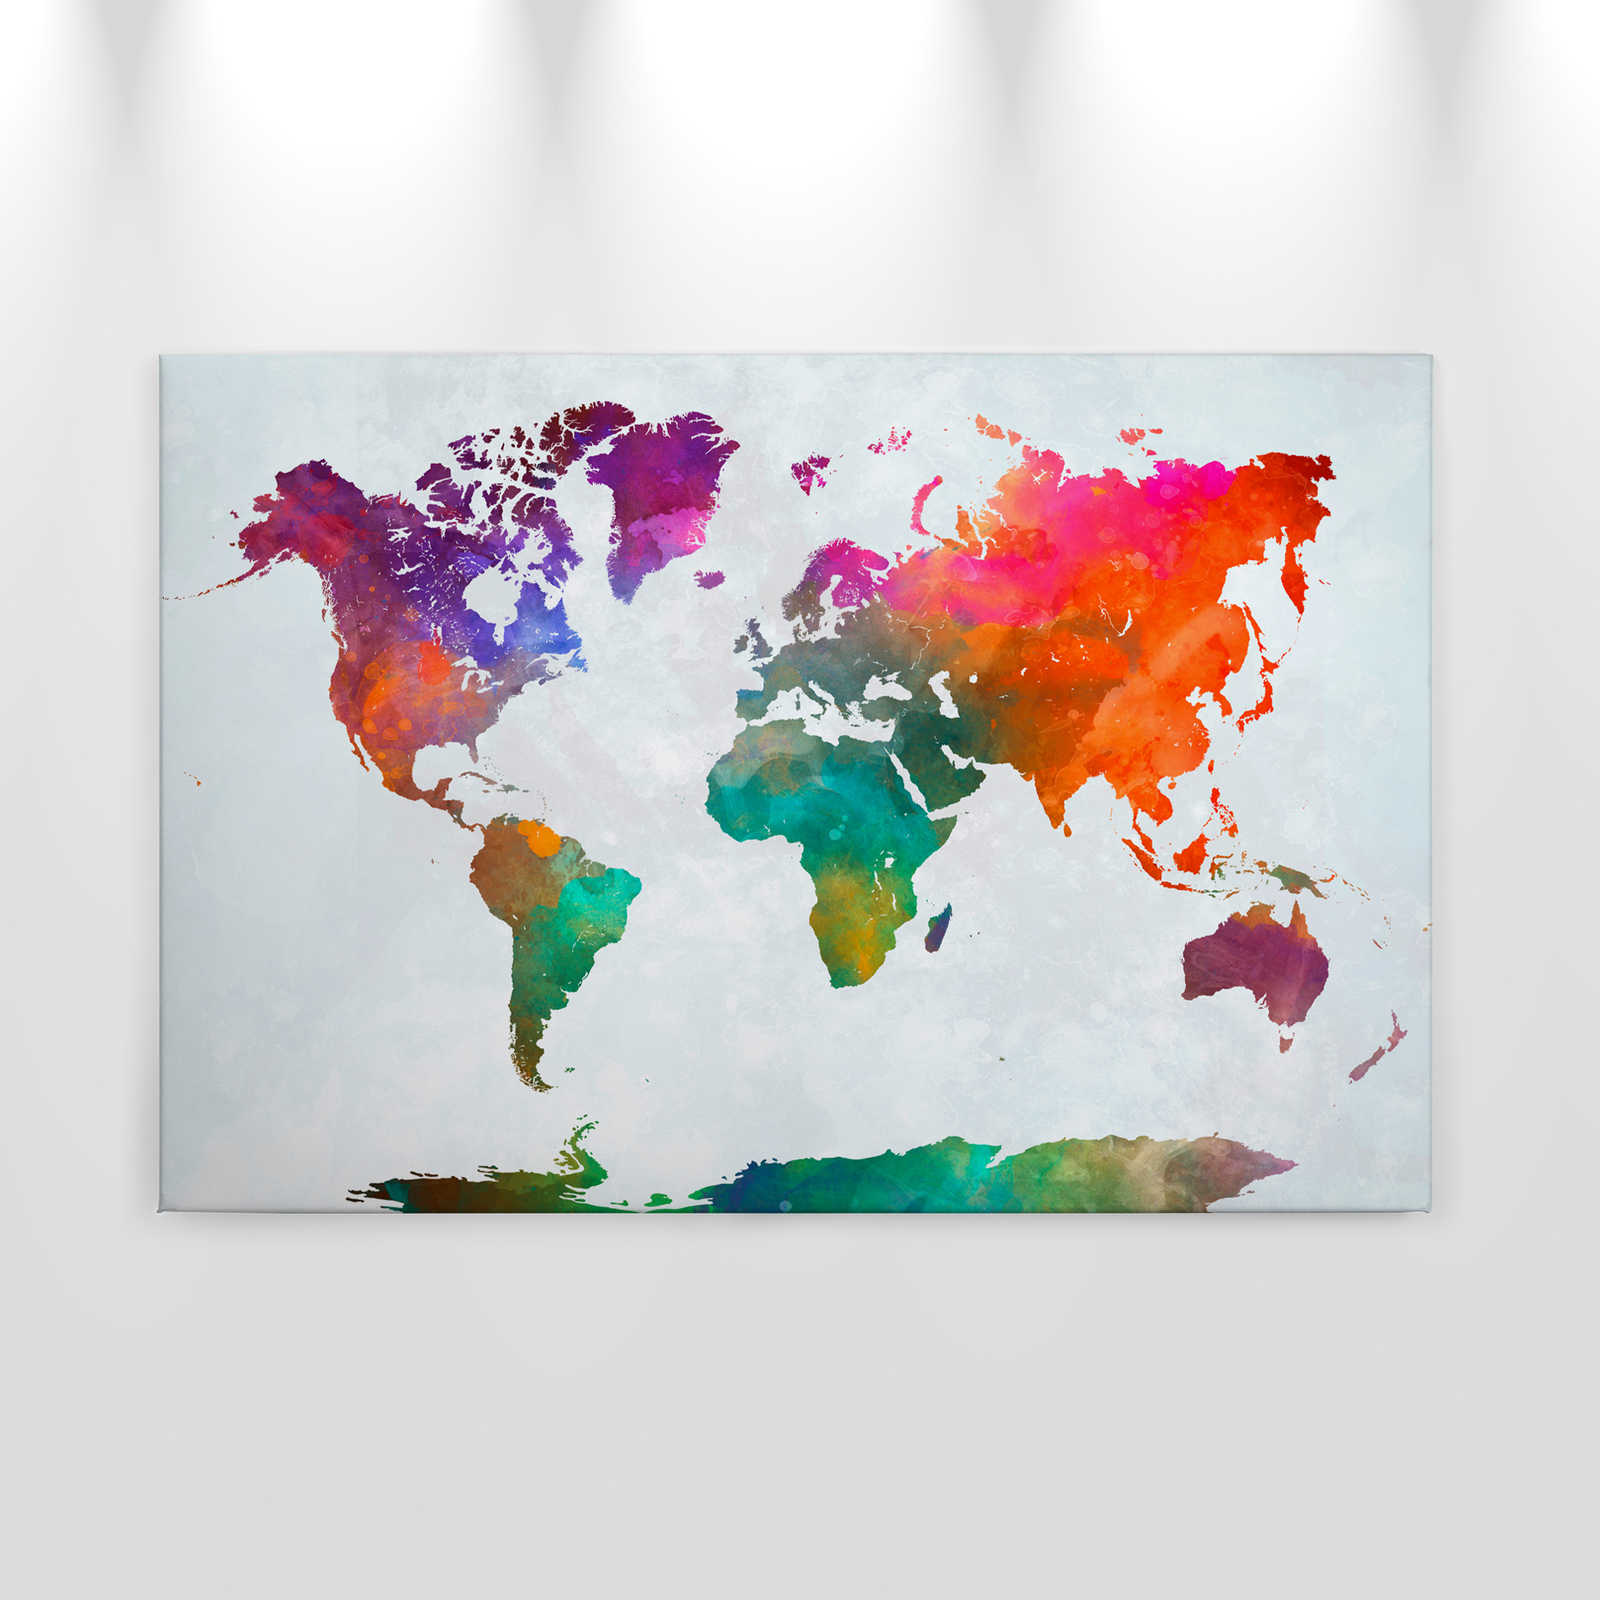             Leinwand bunte Weltkarte – 0,90 m x 0,60 m
        